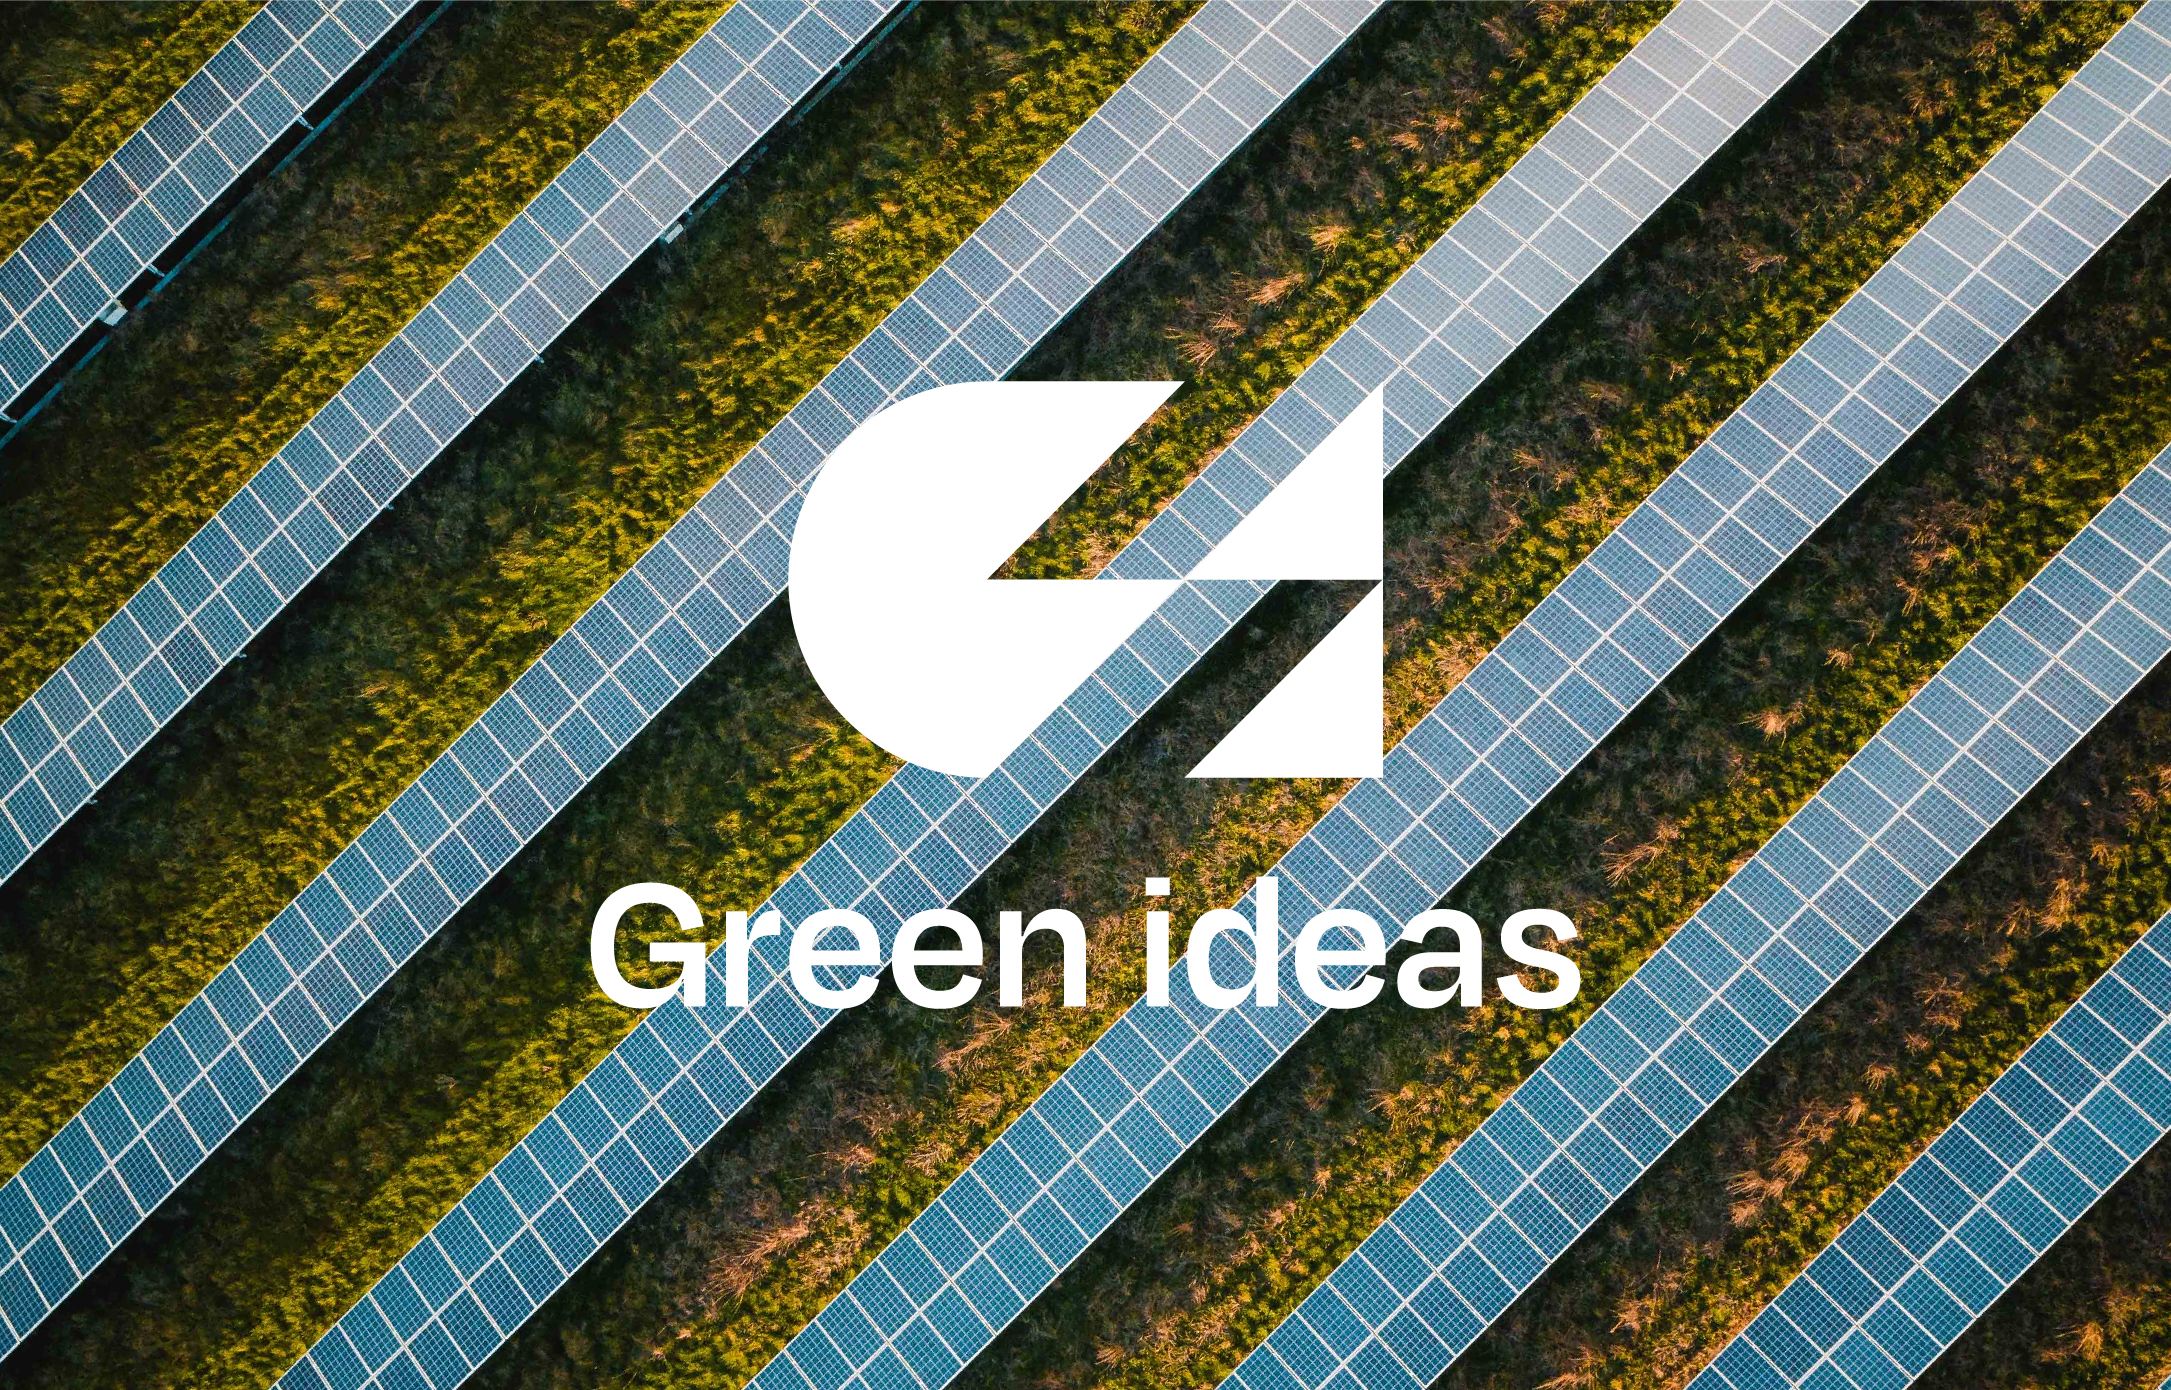 GREEN IDEAS